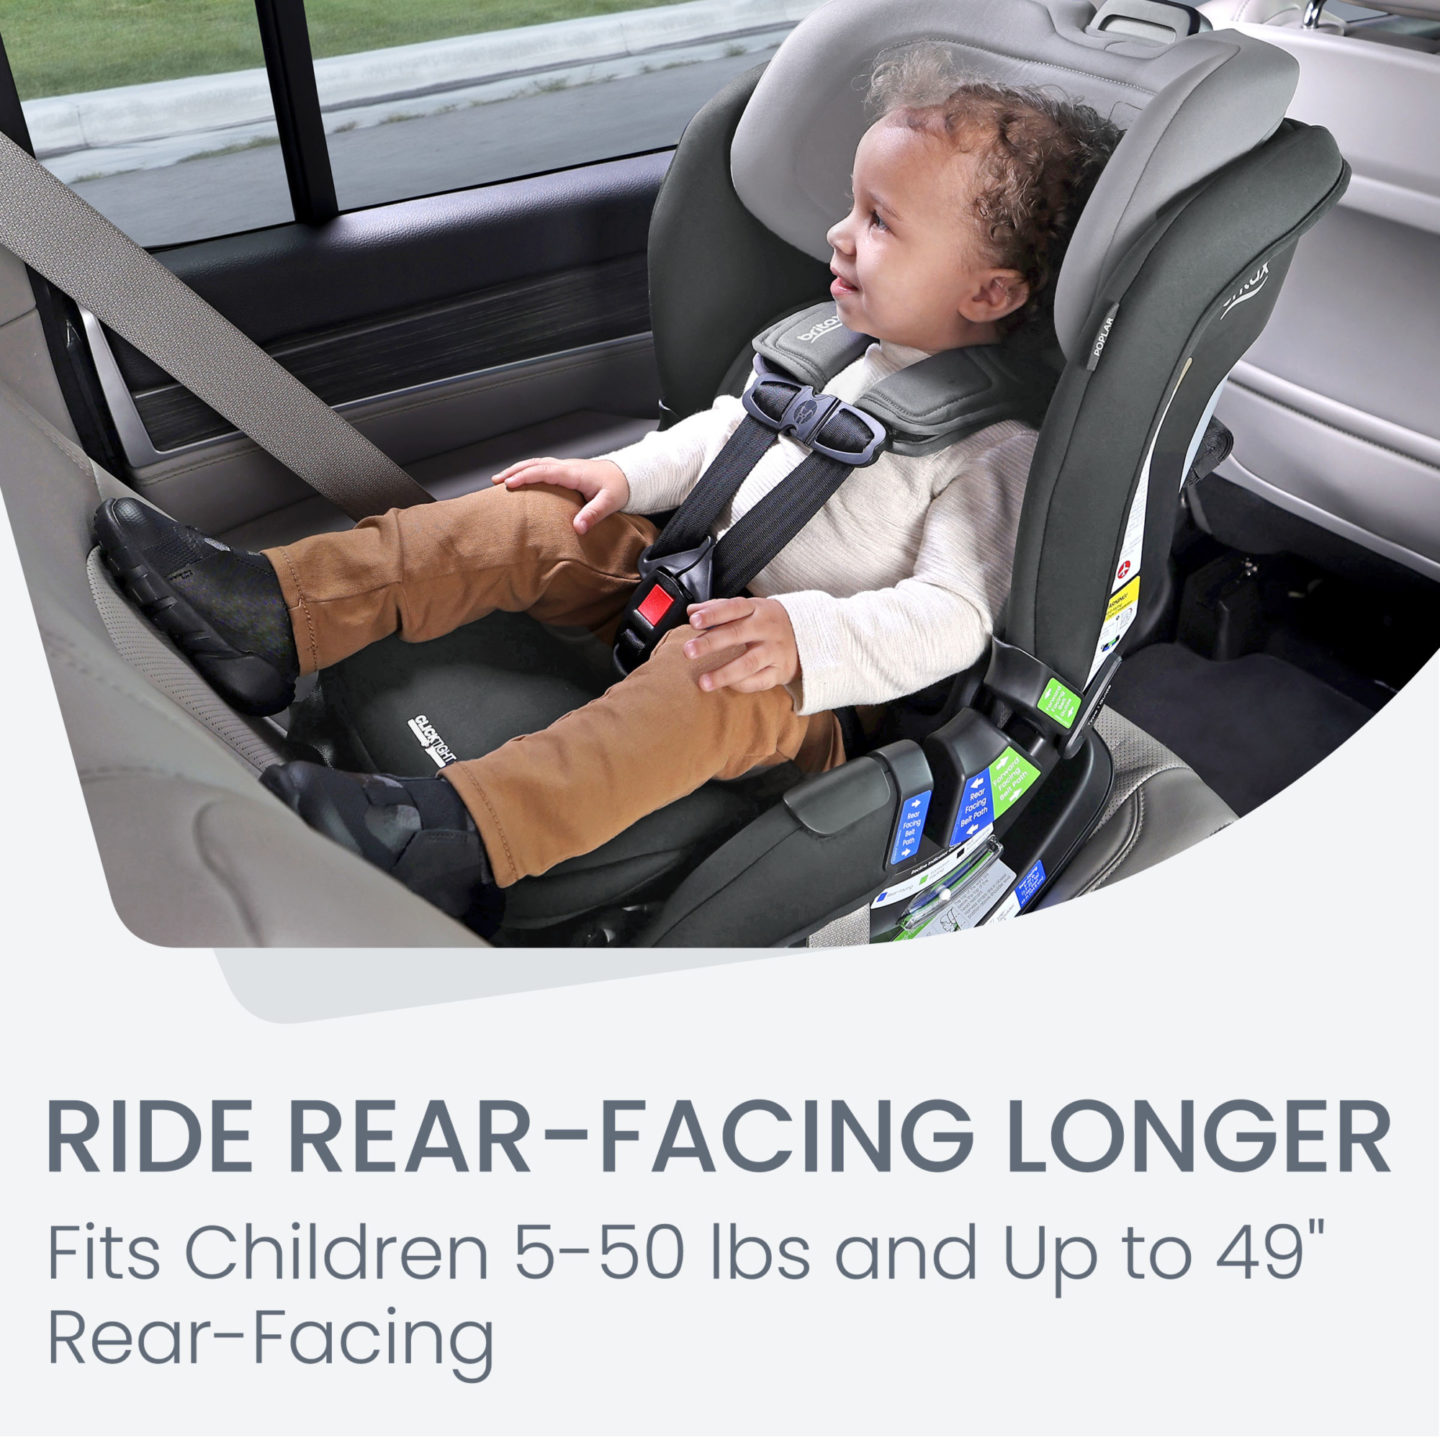 Infant, Child & Convertible Car Seats